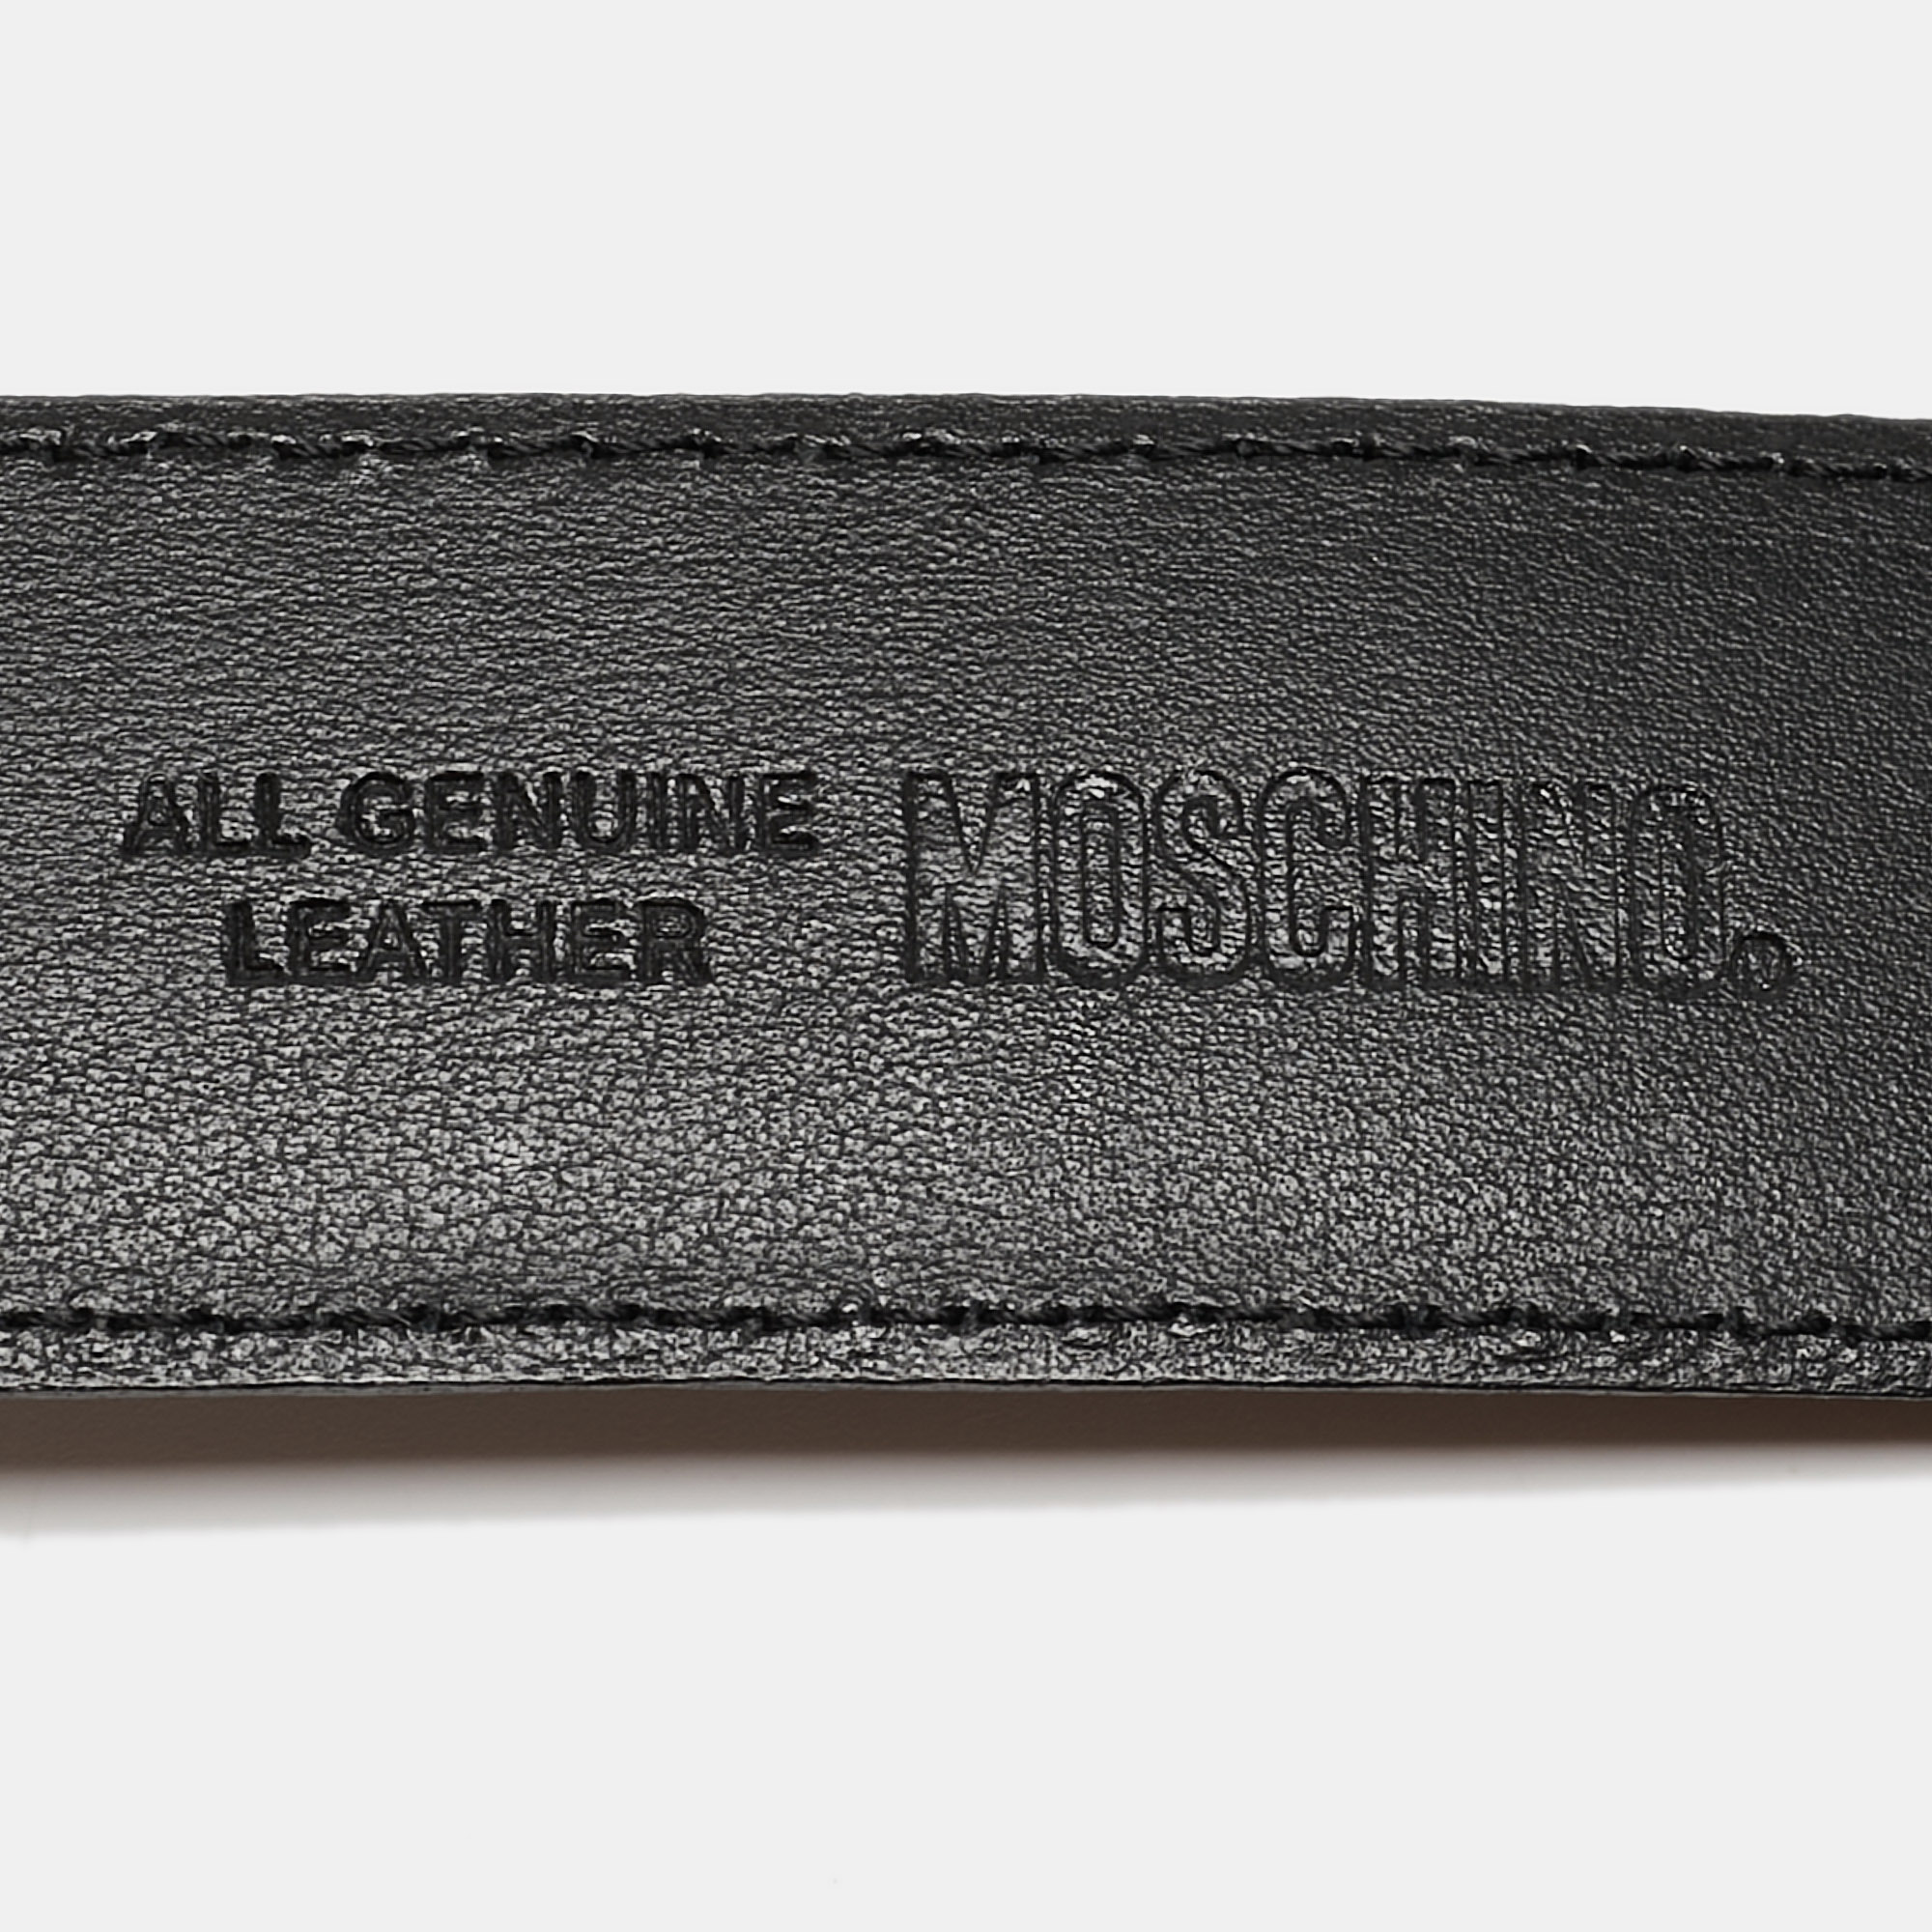 Moschino Black Leather Classic Logo Belt 100 CM